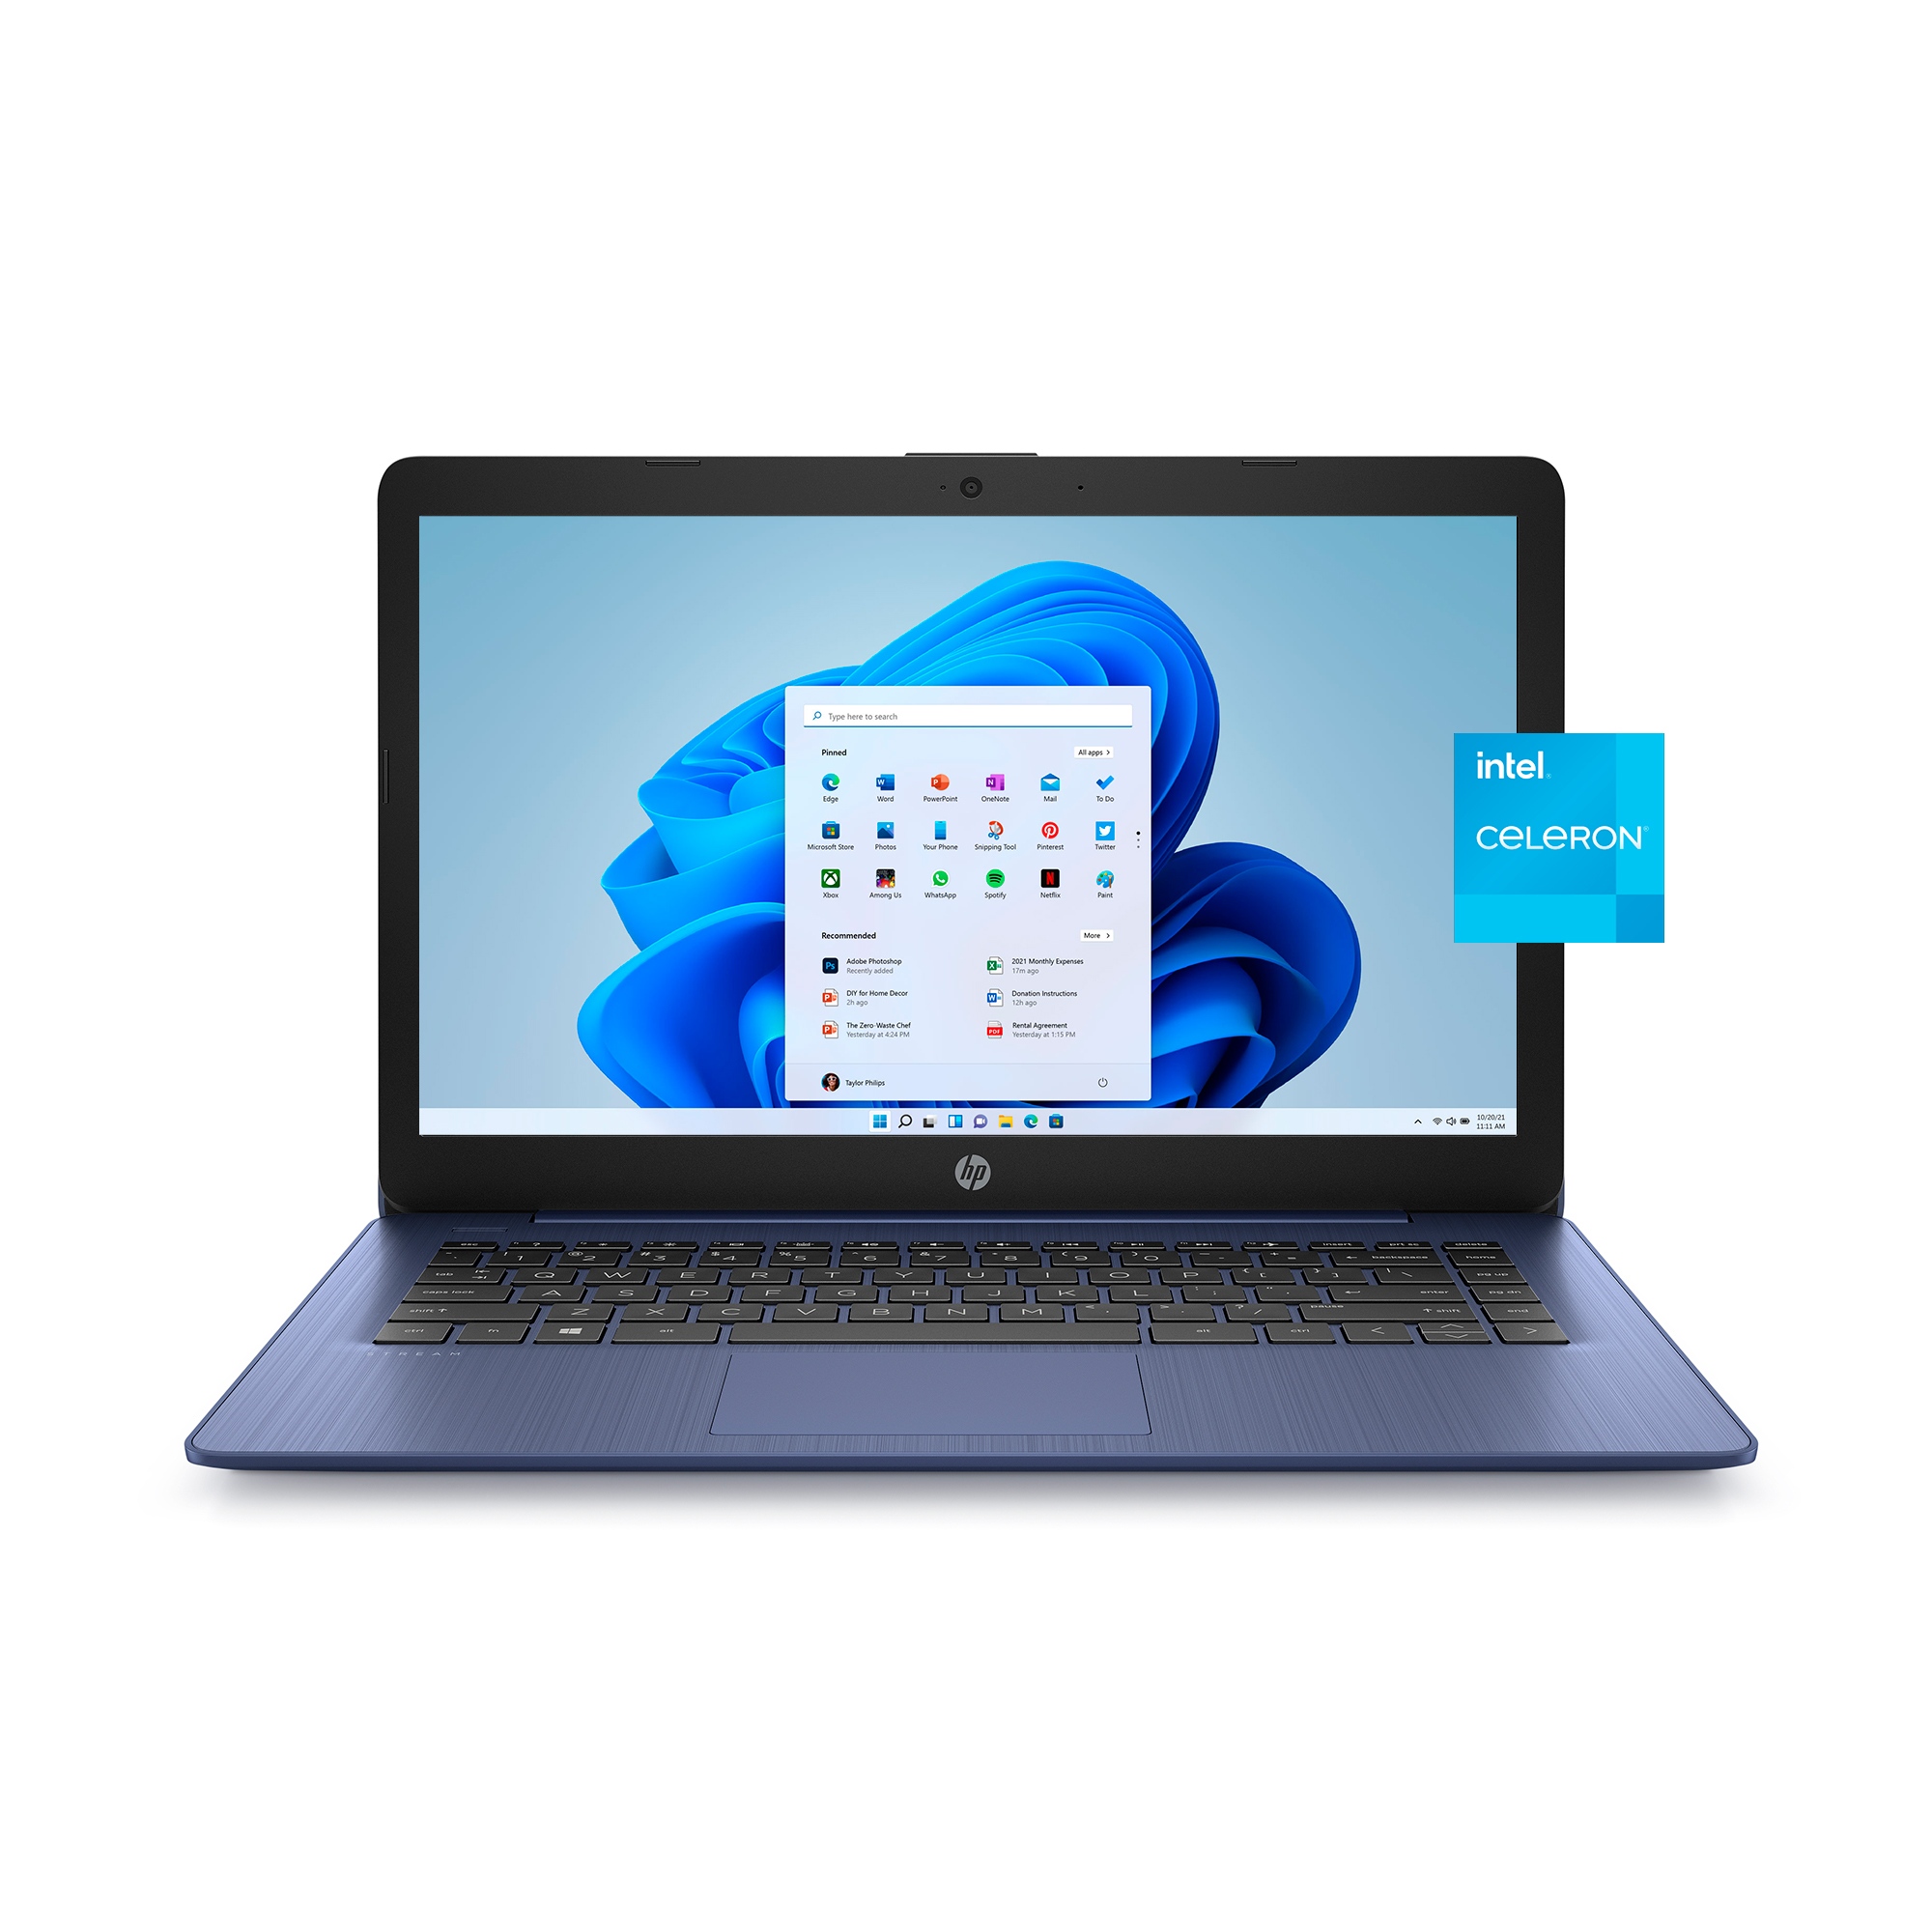 HP 14" PC Laptop, Intel Celeron N4000, 4GB RAM, 64GB HD, Windows 10S with 1 year Office 365, Blue, 14-cb171wm - image 1 of 12